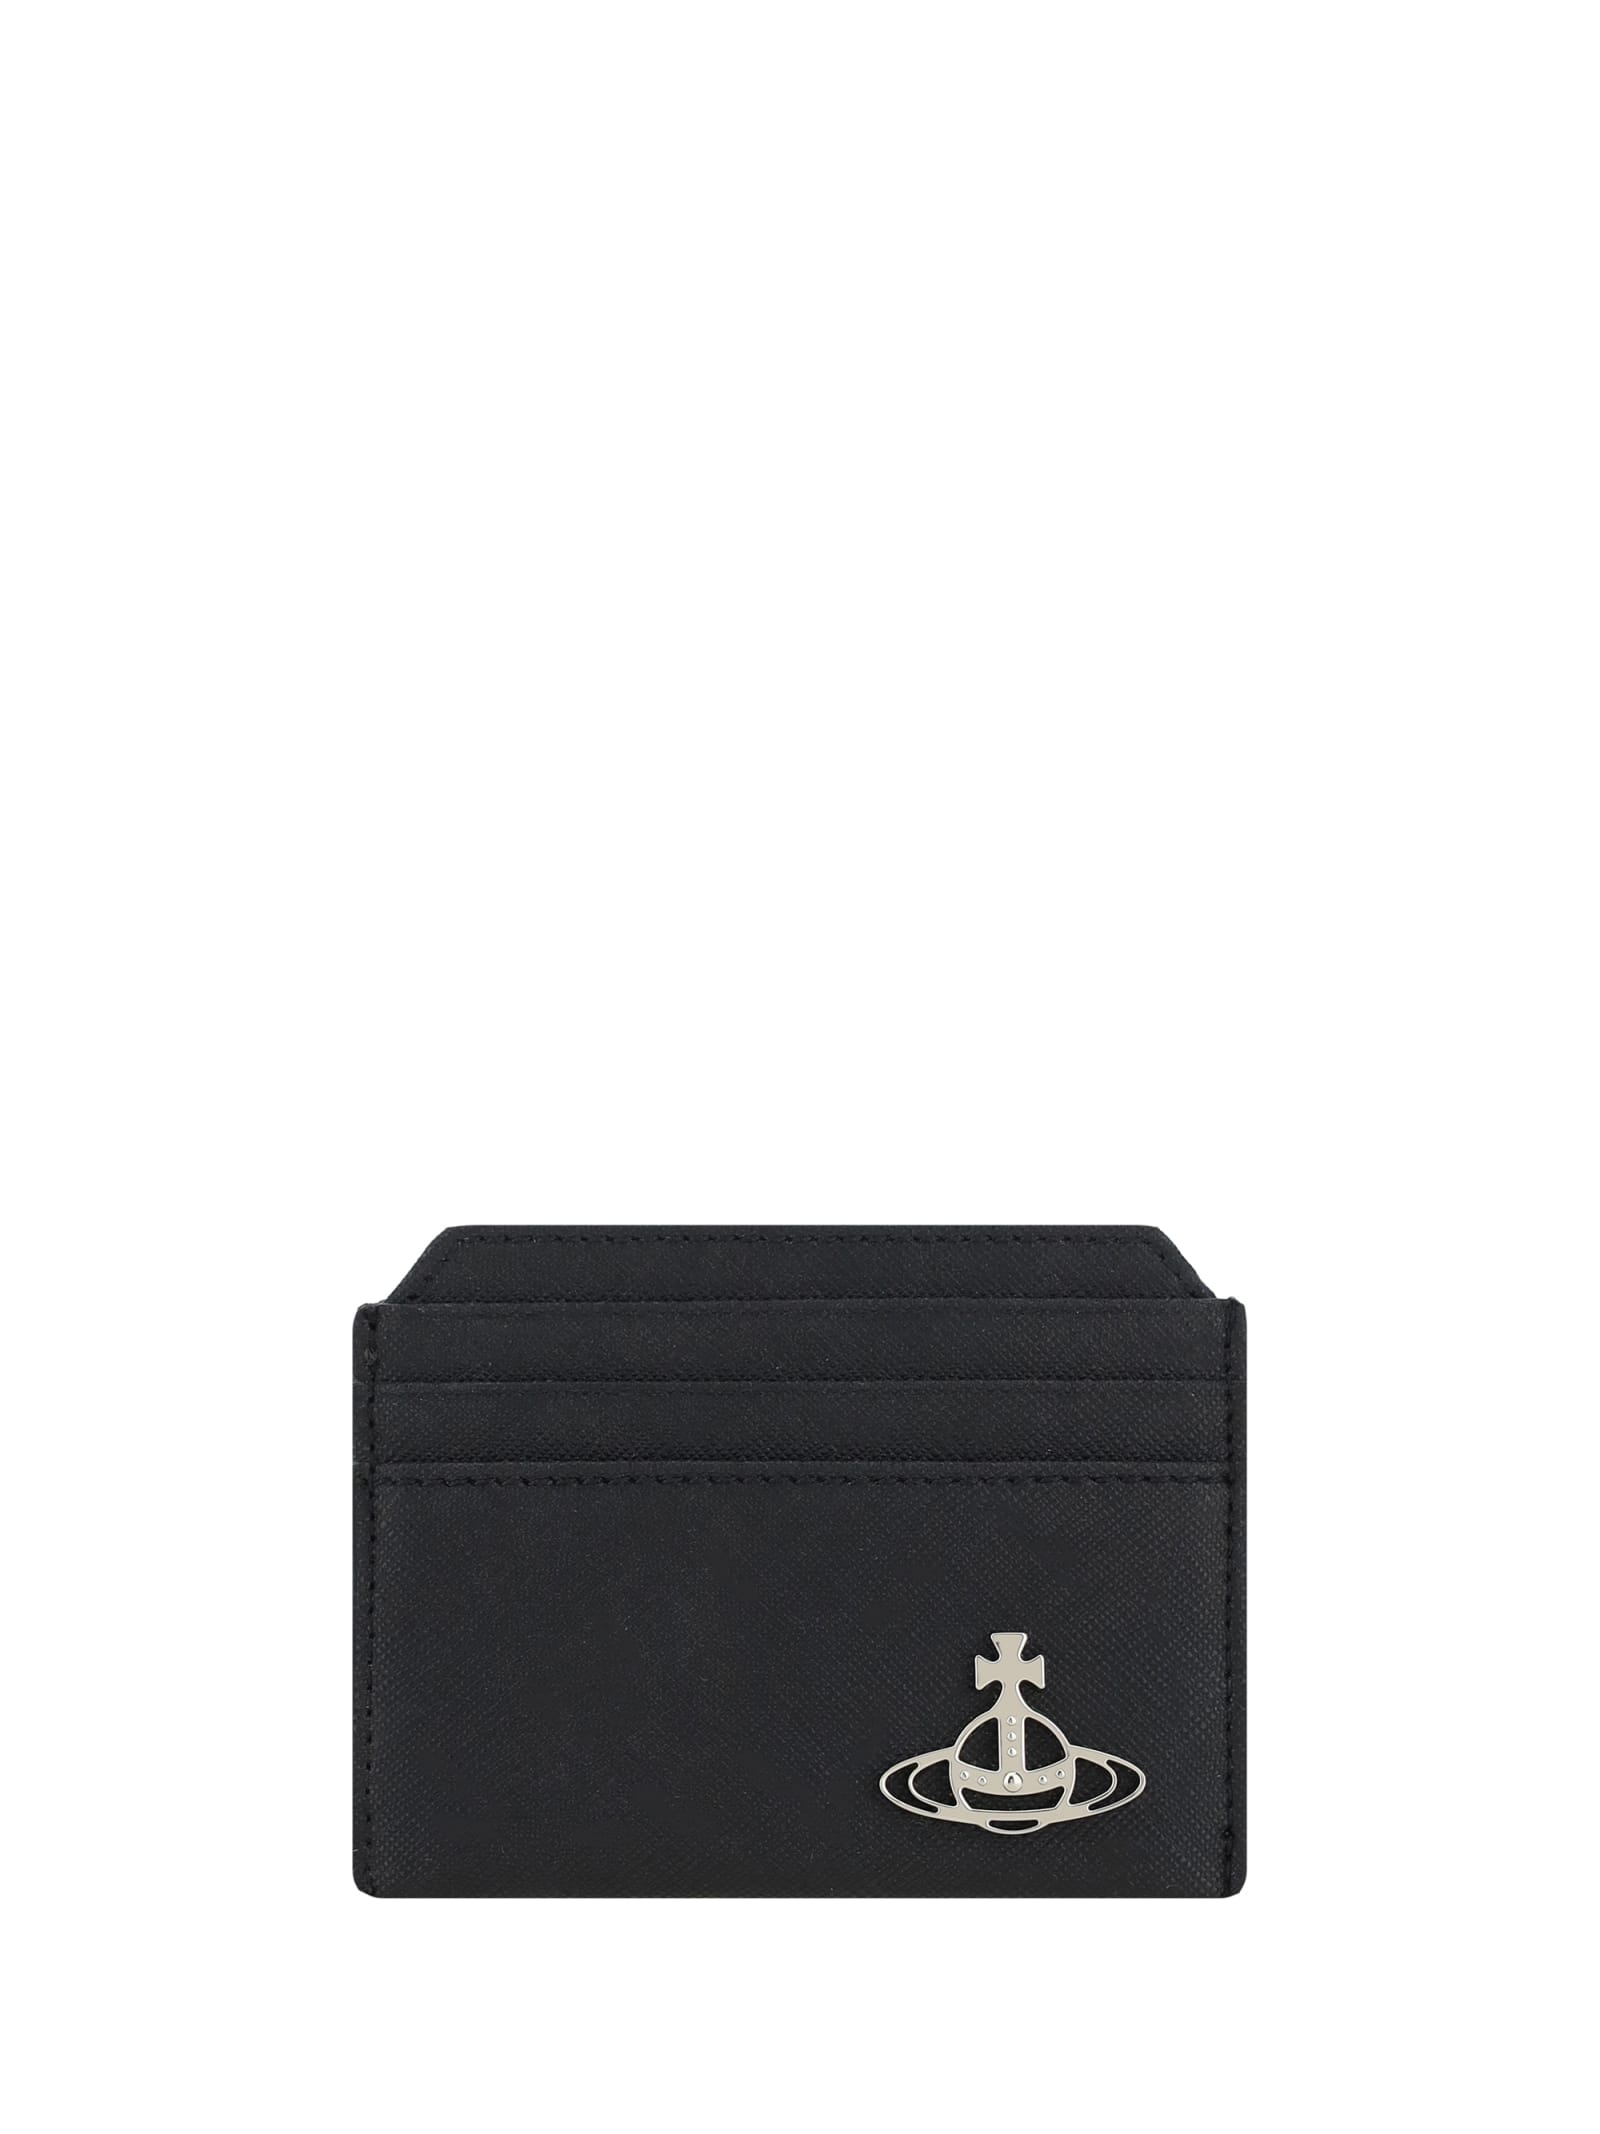 Vivienne Westwood Card Holder In Black